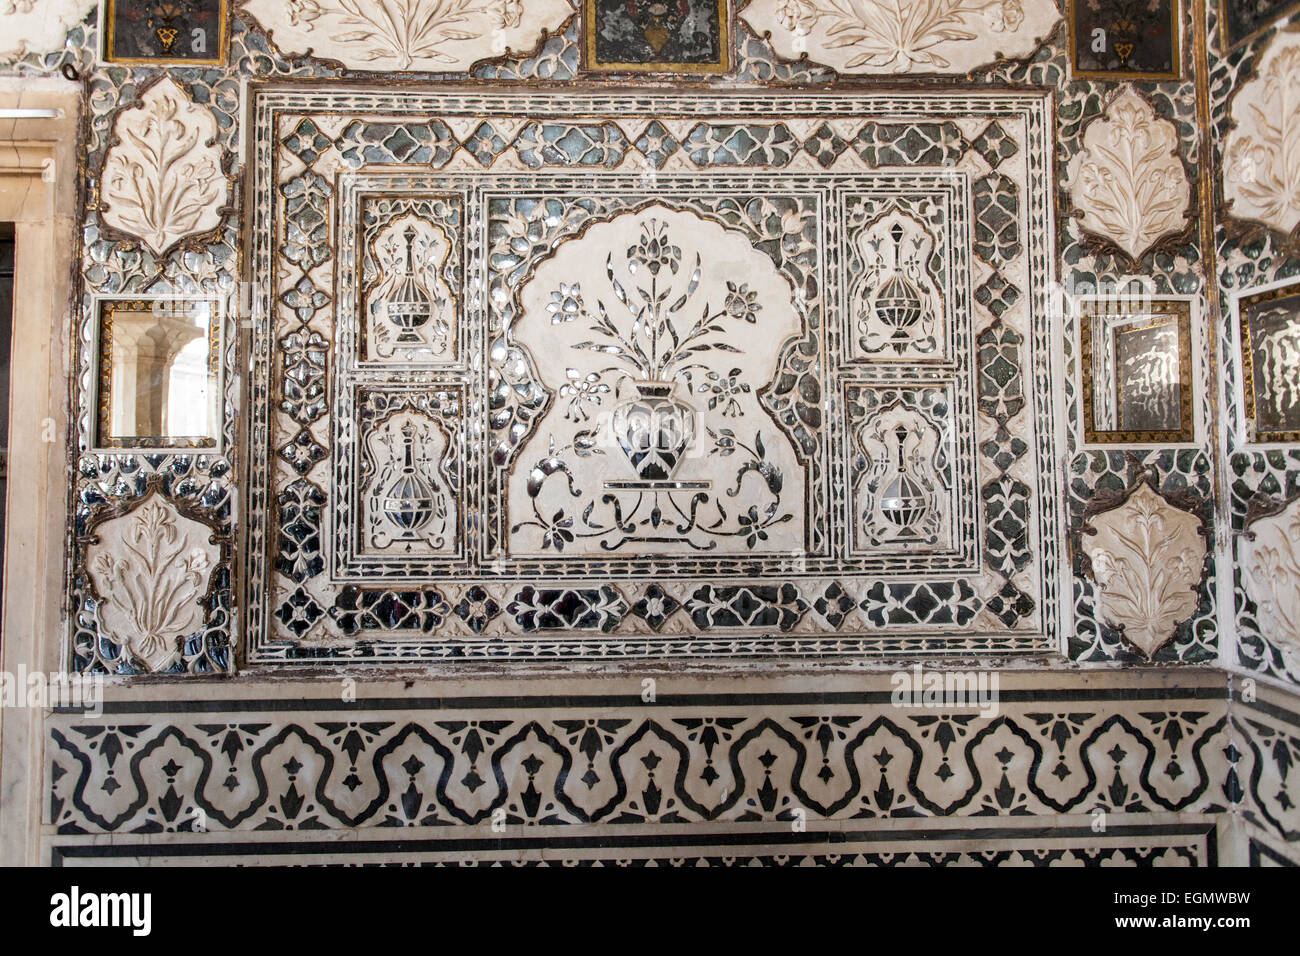 the Sheesh Mahal (mirror palace) in the Amber Palace Stock Photo